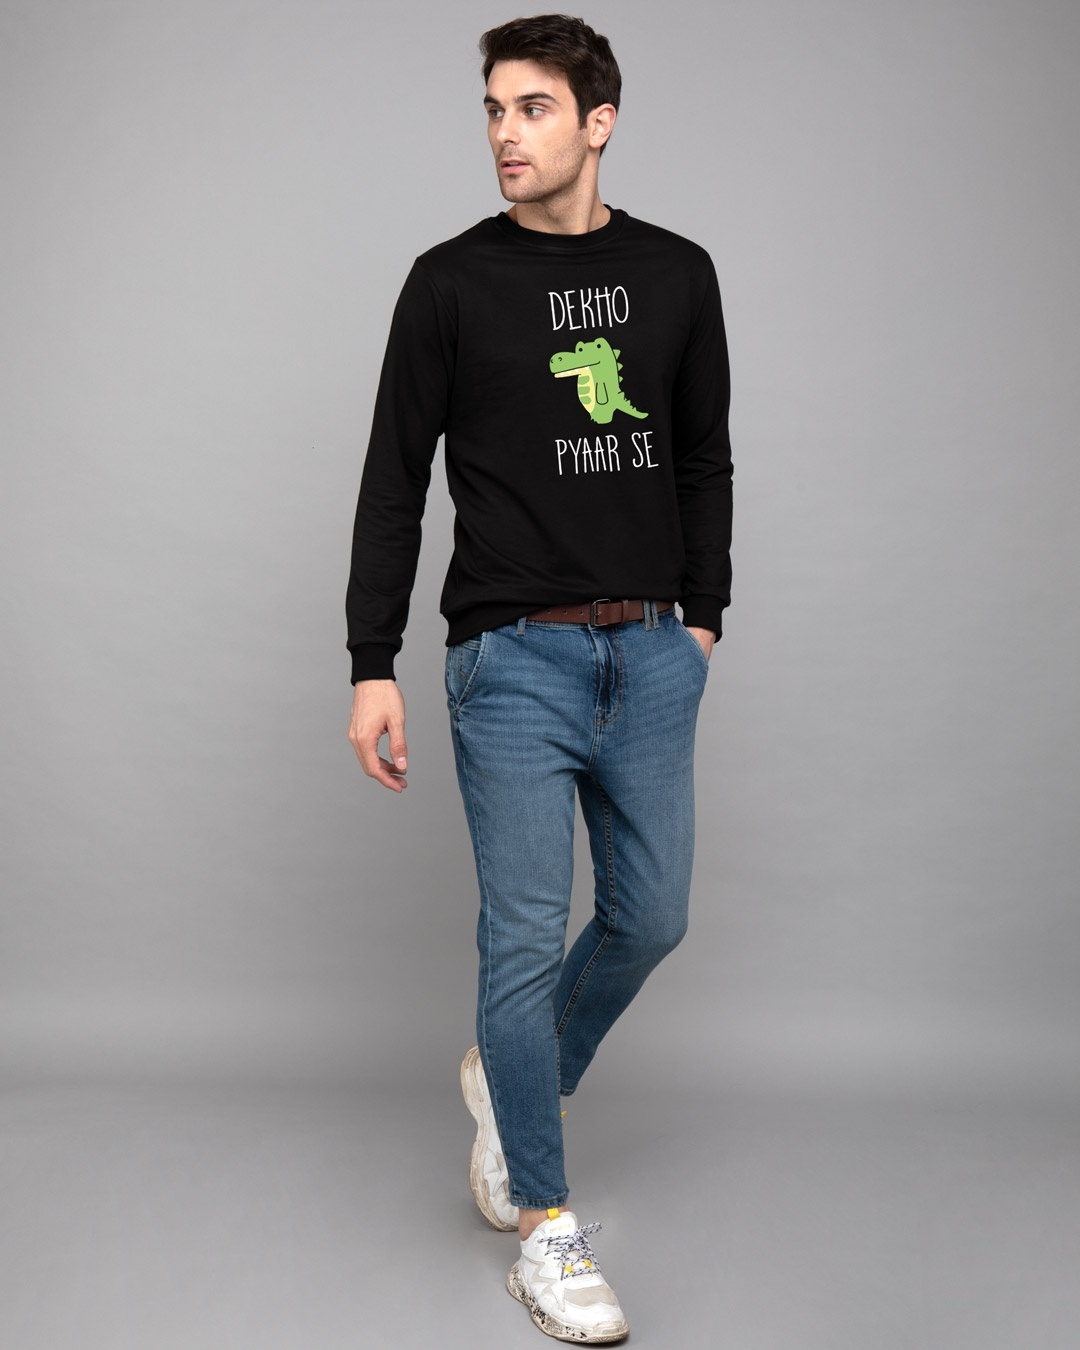 Shop Magarmach Fleece Light Sweatshirt-Design